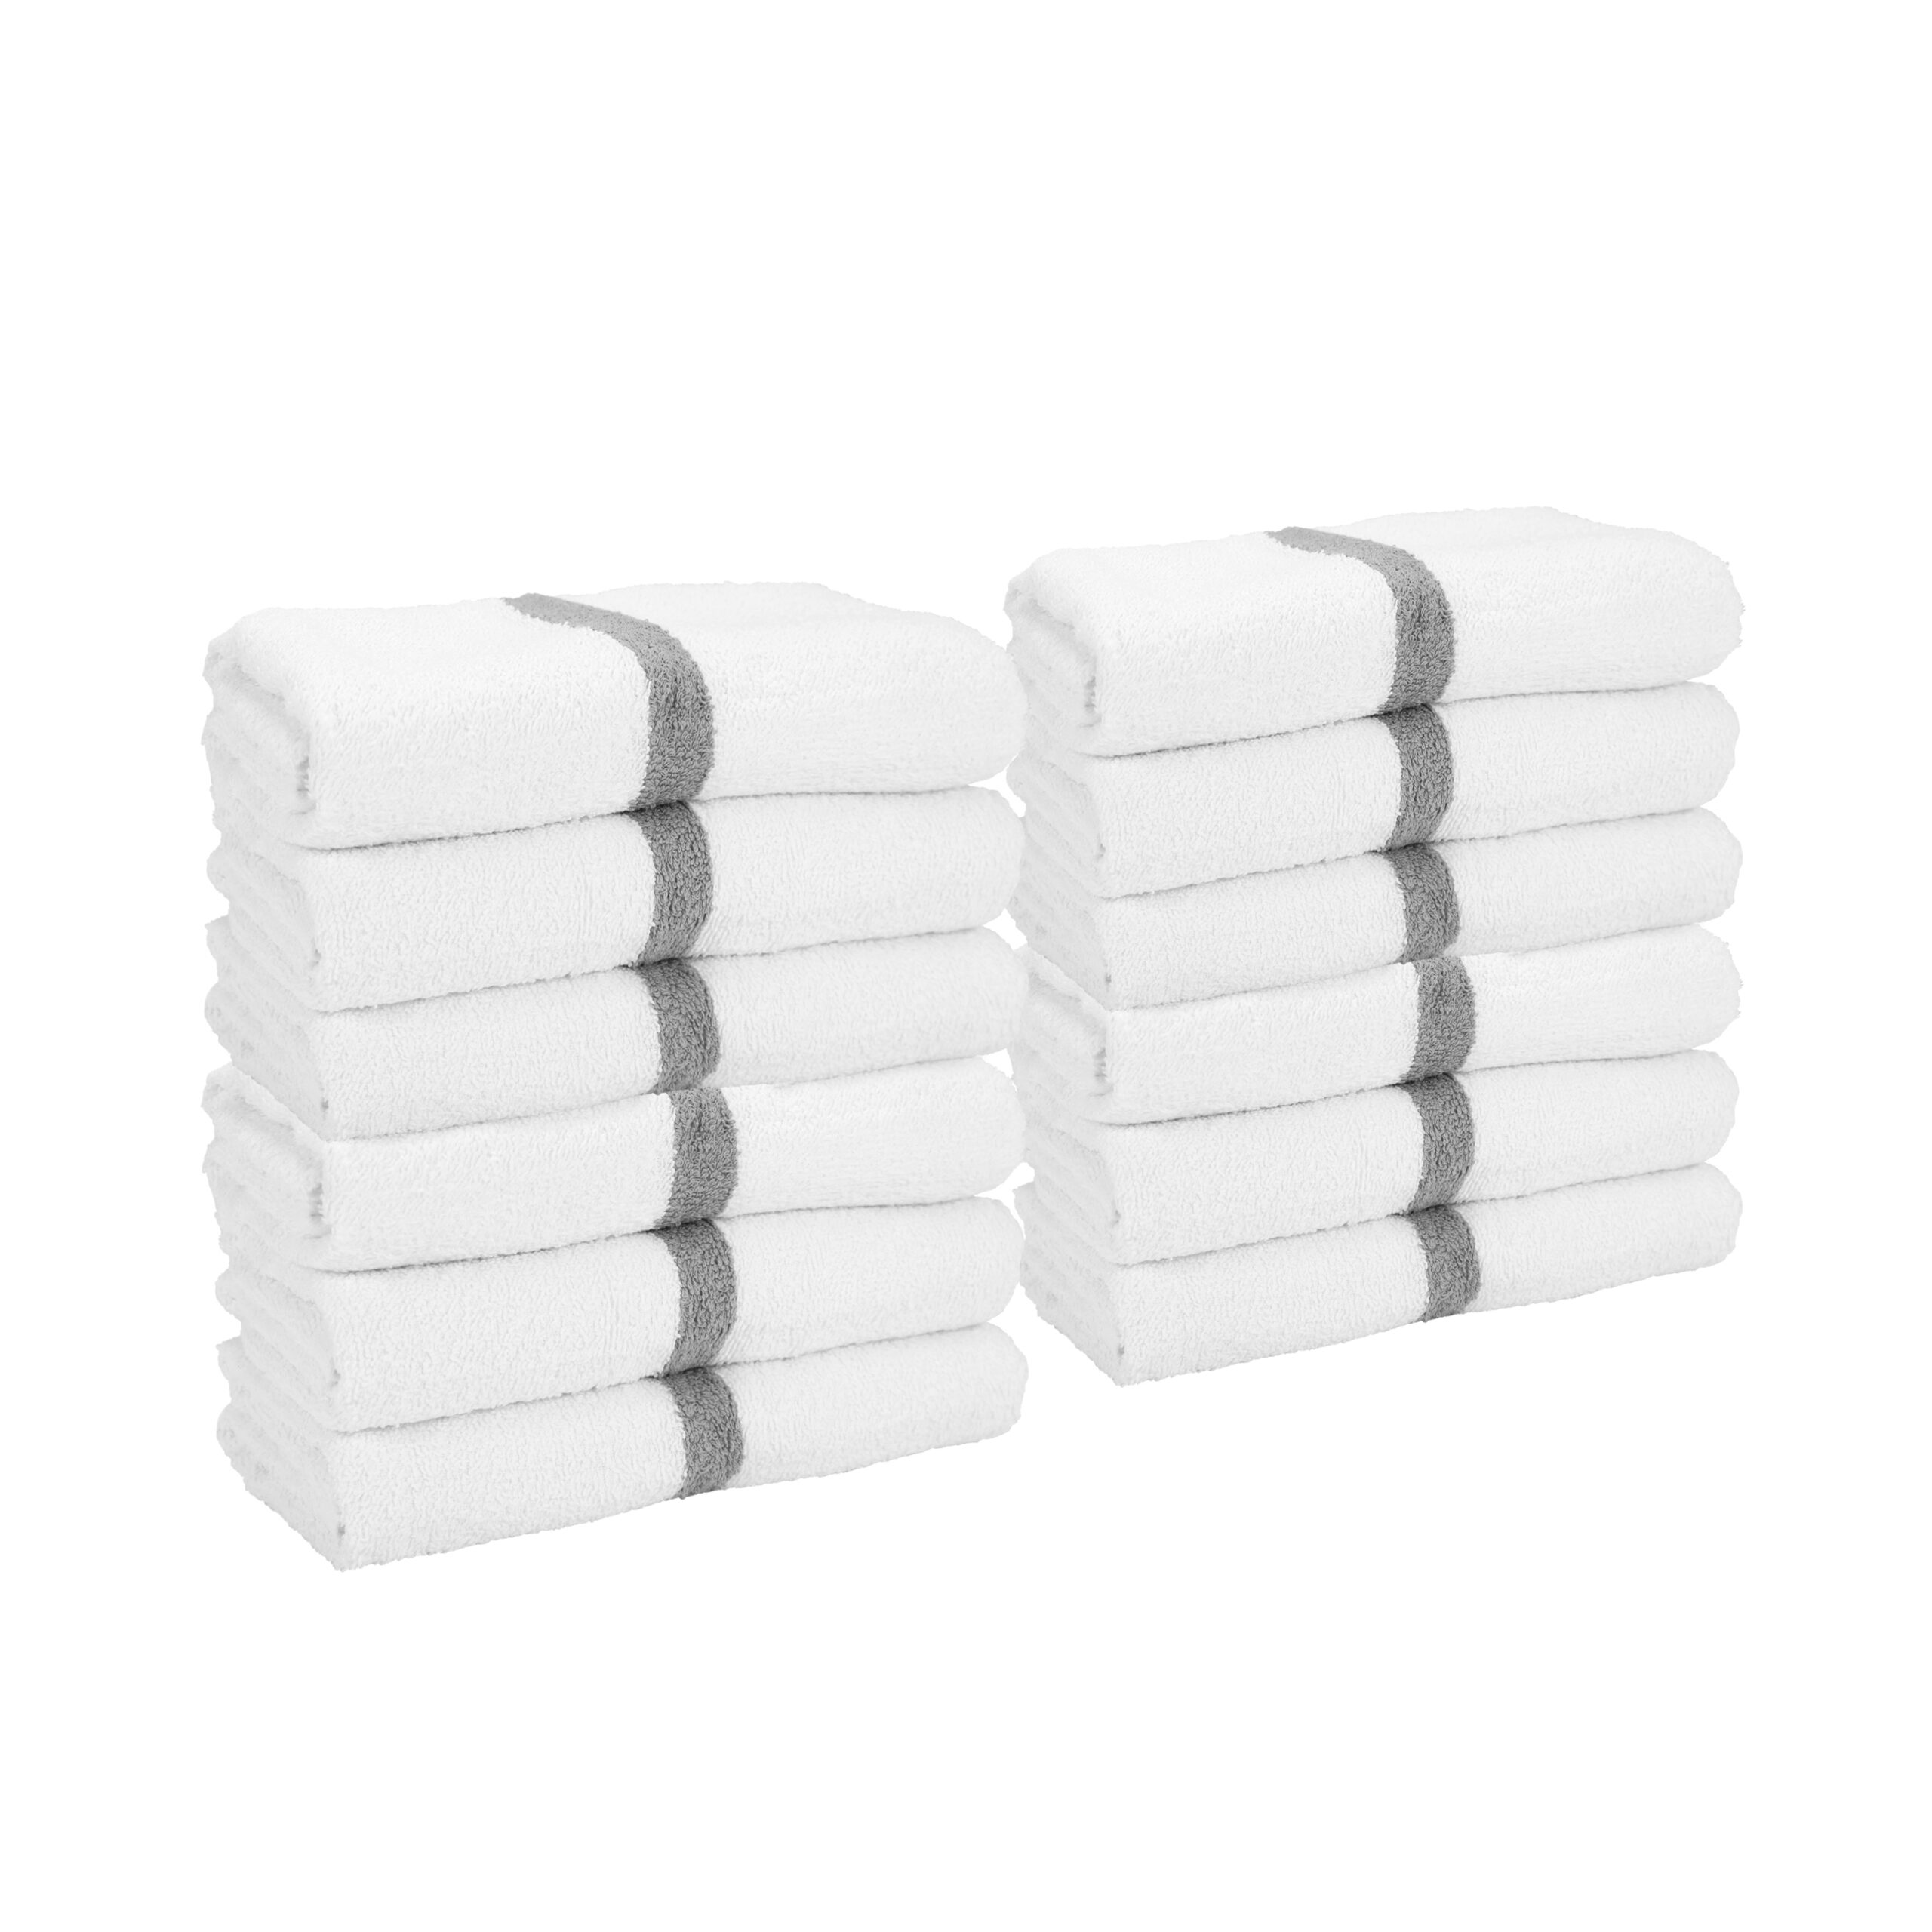 Wholesale microfiber towels - economy 12x12 200gsm